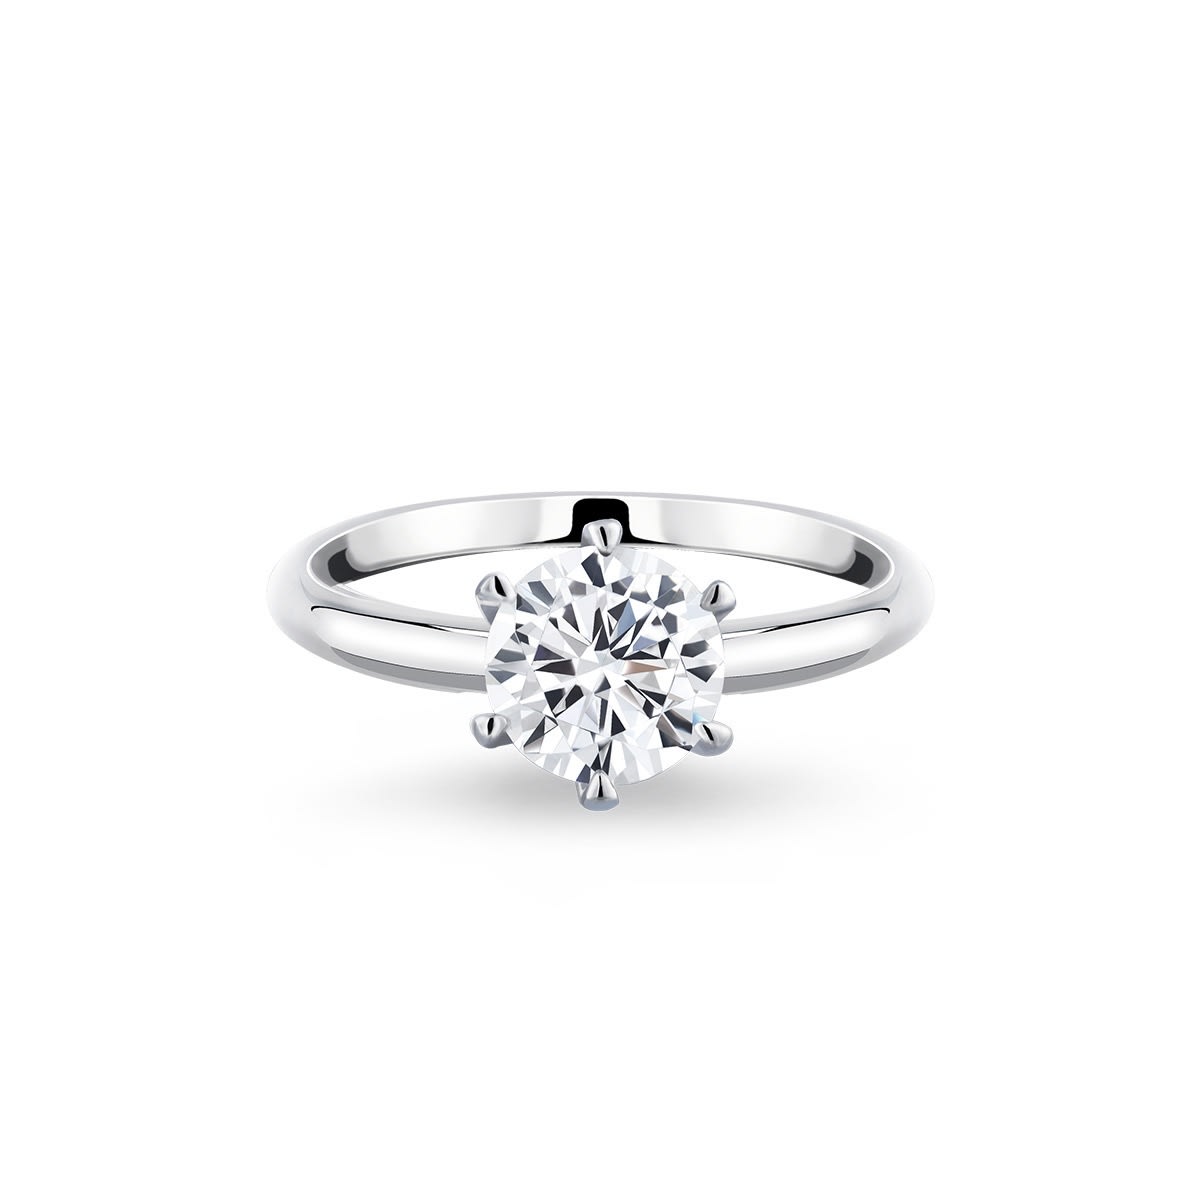 iuiga 1 carat solitaire diamond ring in 18k white gold   2 499 to  3 399 data